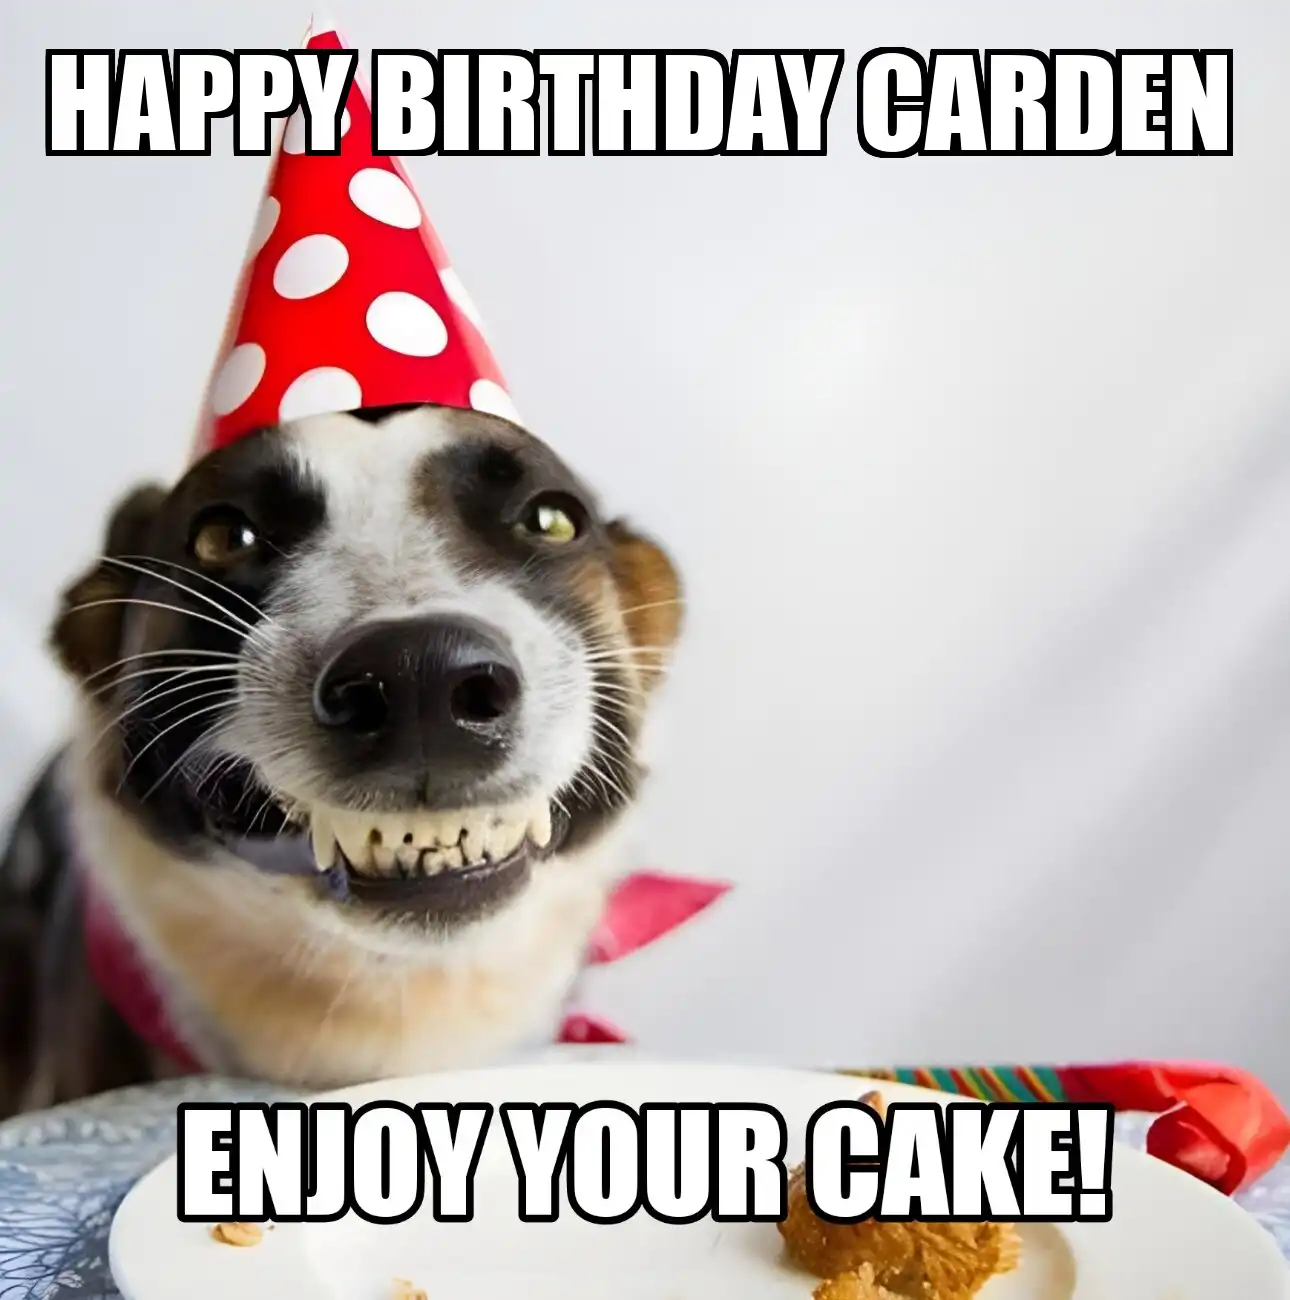 Happy Birthday Carden Enjoy Your Cake Dog Meme